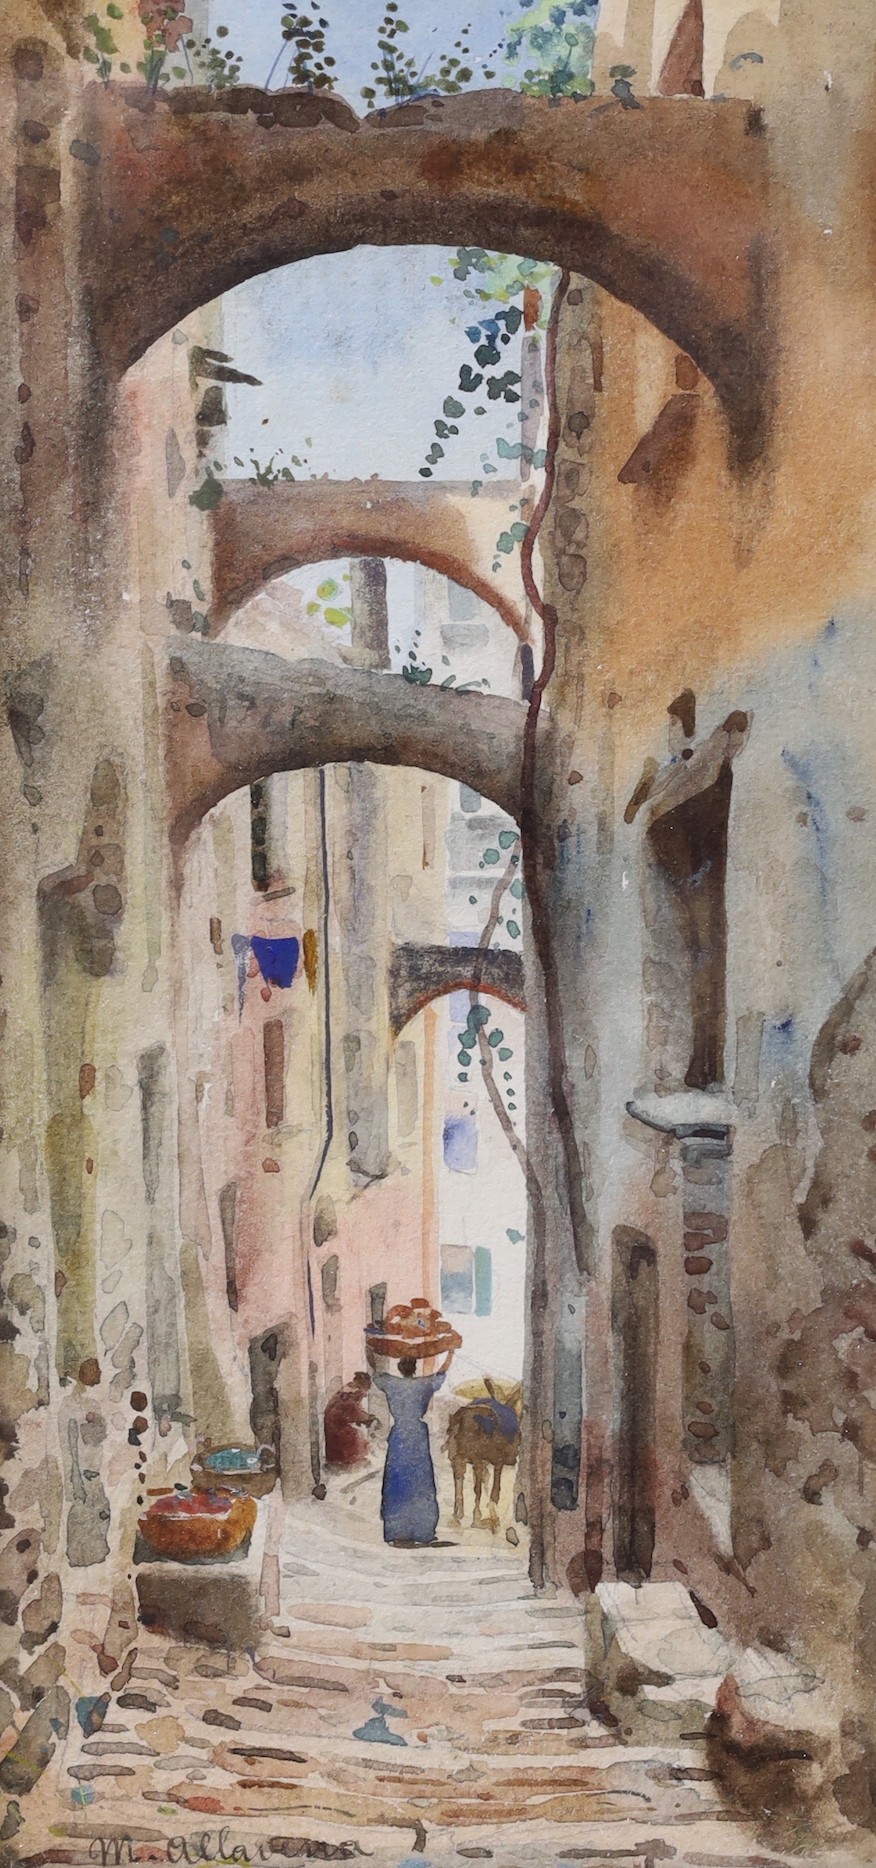 Michele Allavena (1863-1963), pair of watercolours, Neapolitan street scenes, signed, 25 x 12cm